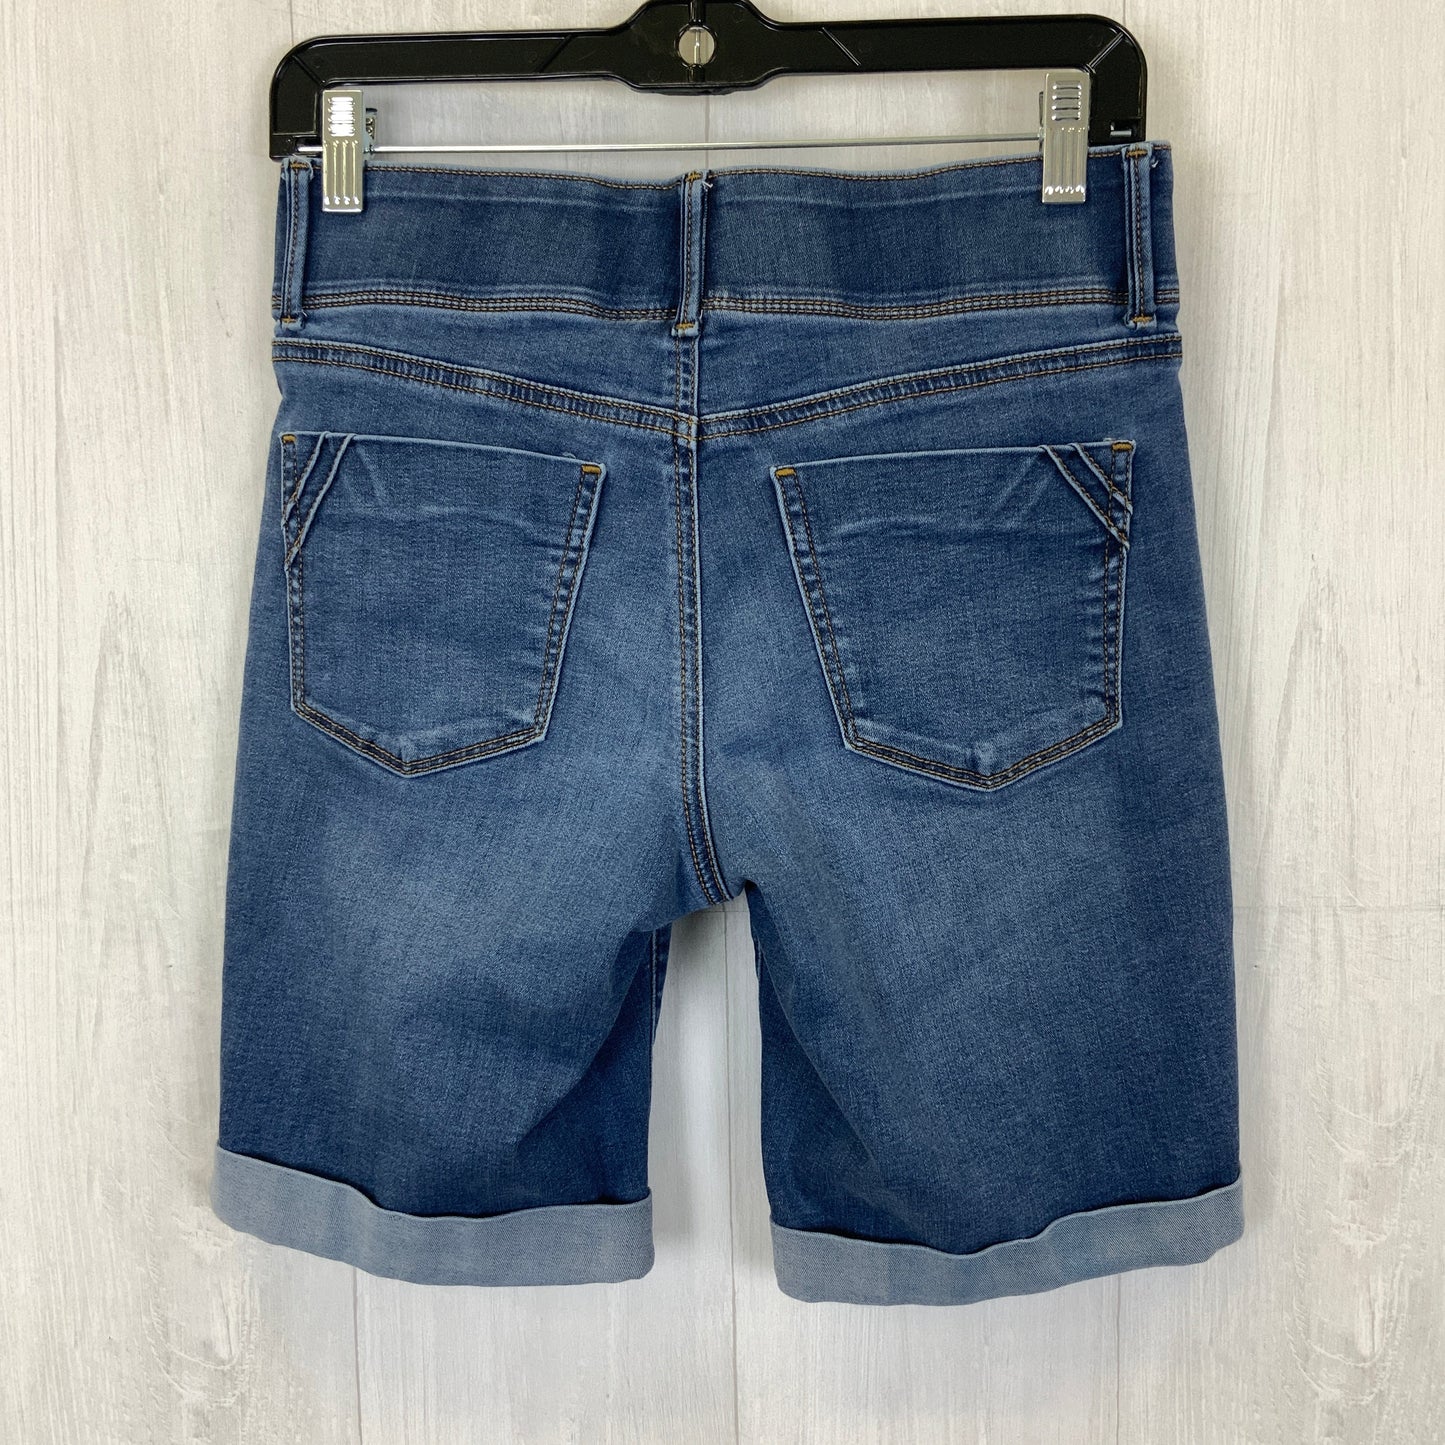 Blue Denim Shorts Apt 9, Size 6